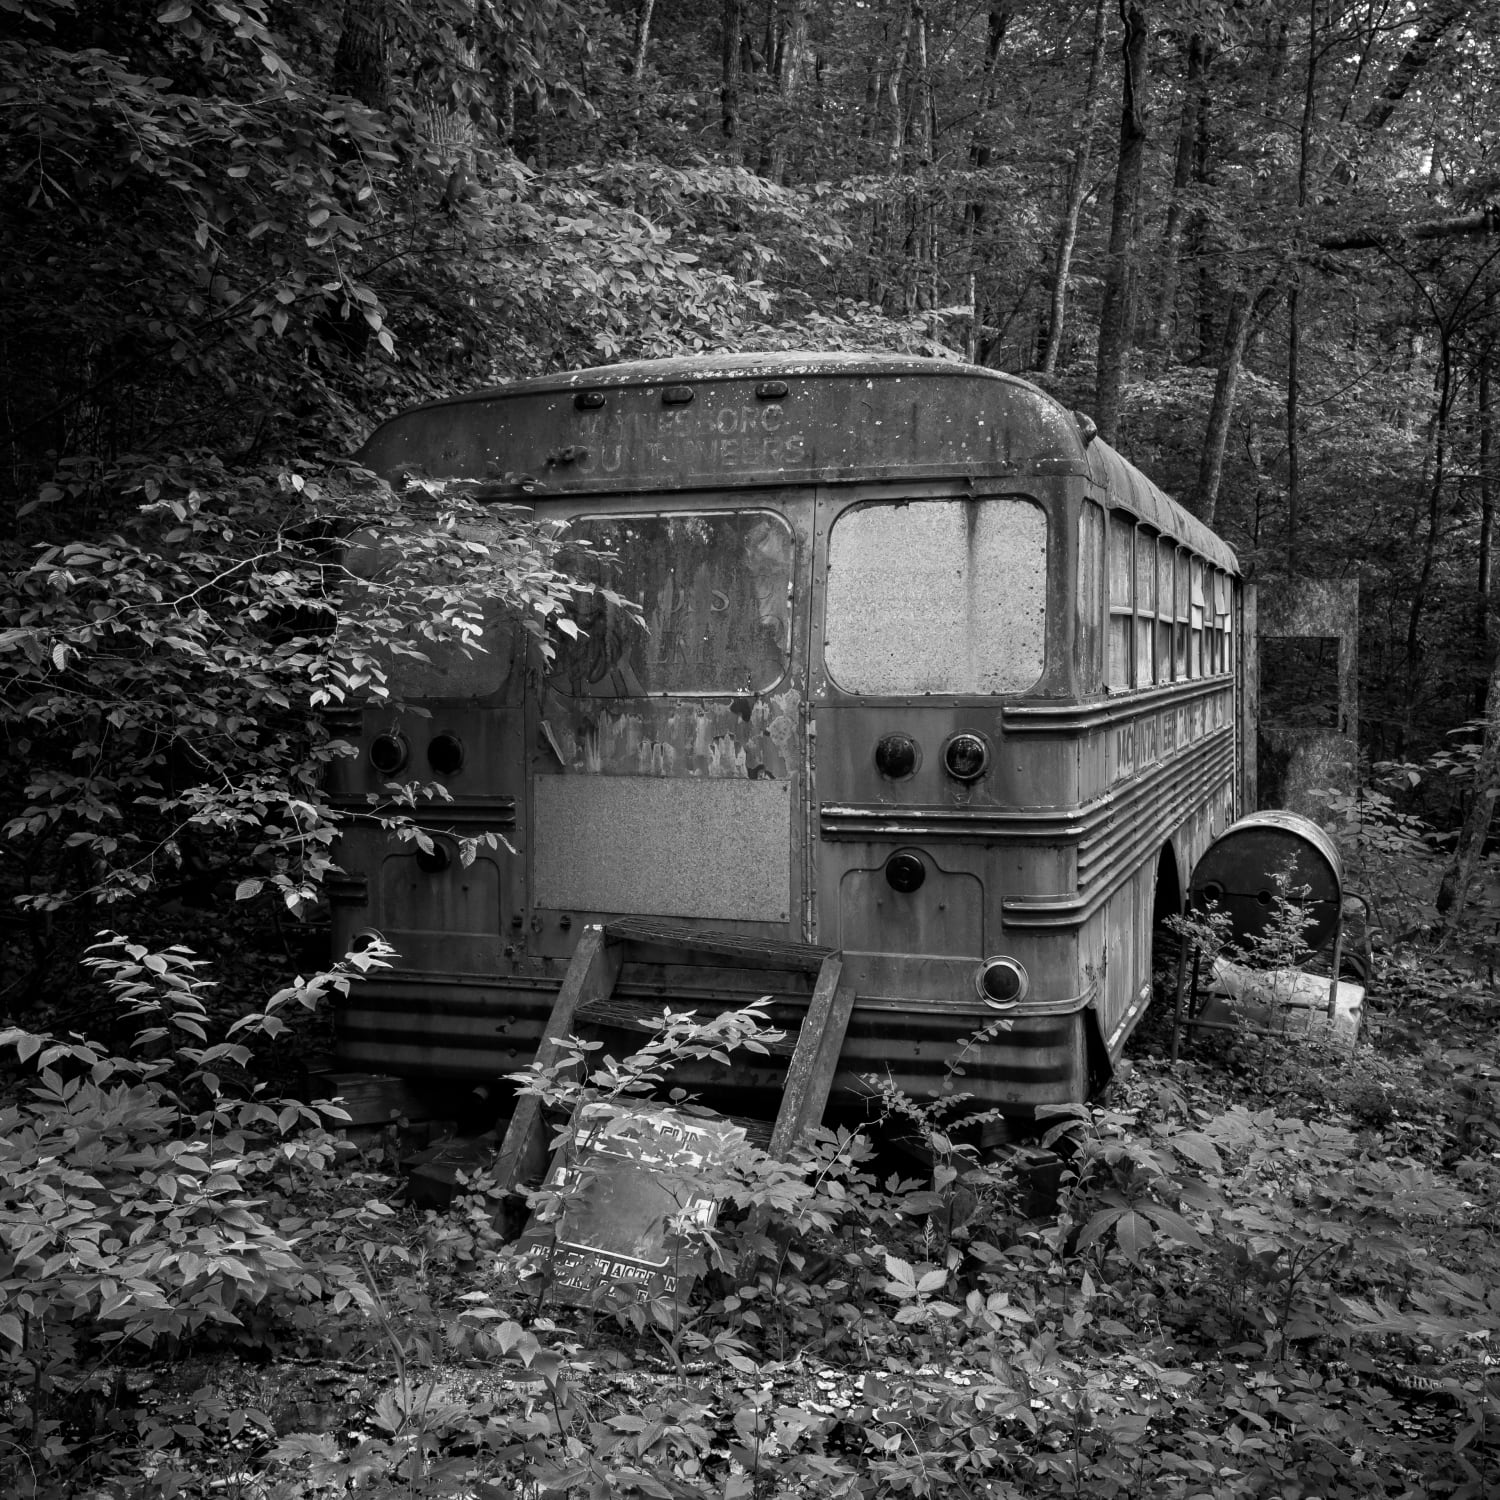 Abandoned bus in Virginia’s Shenandoah National Park